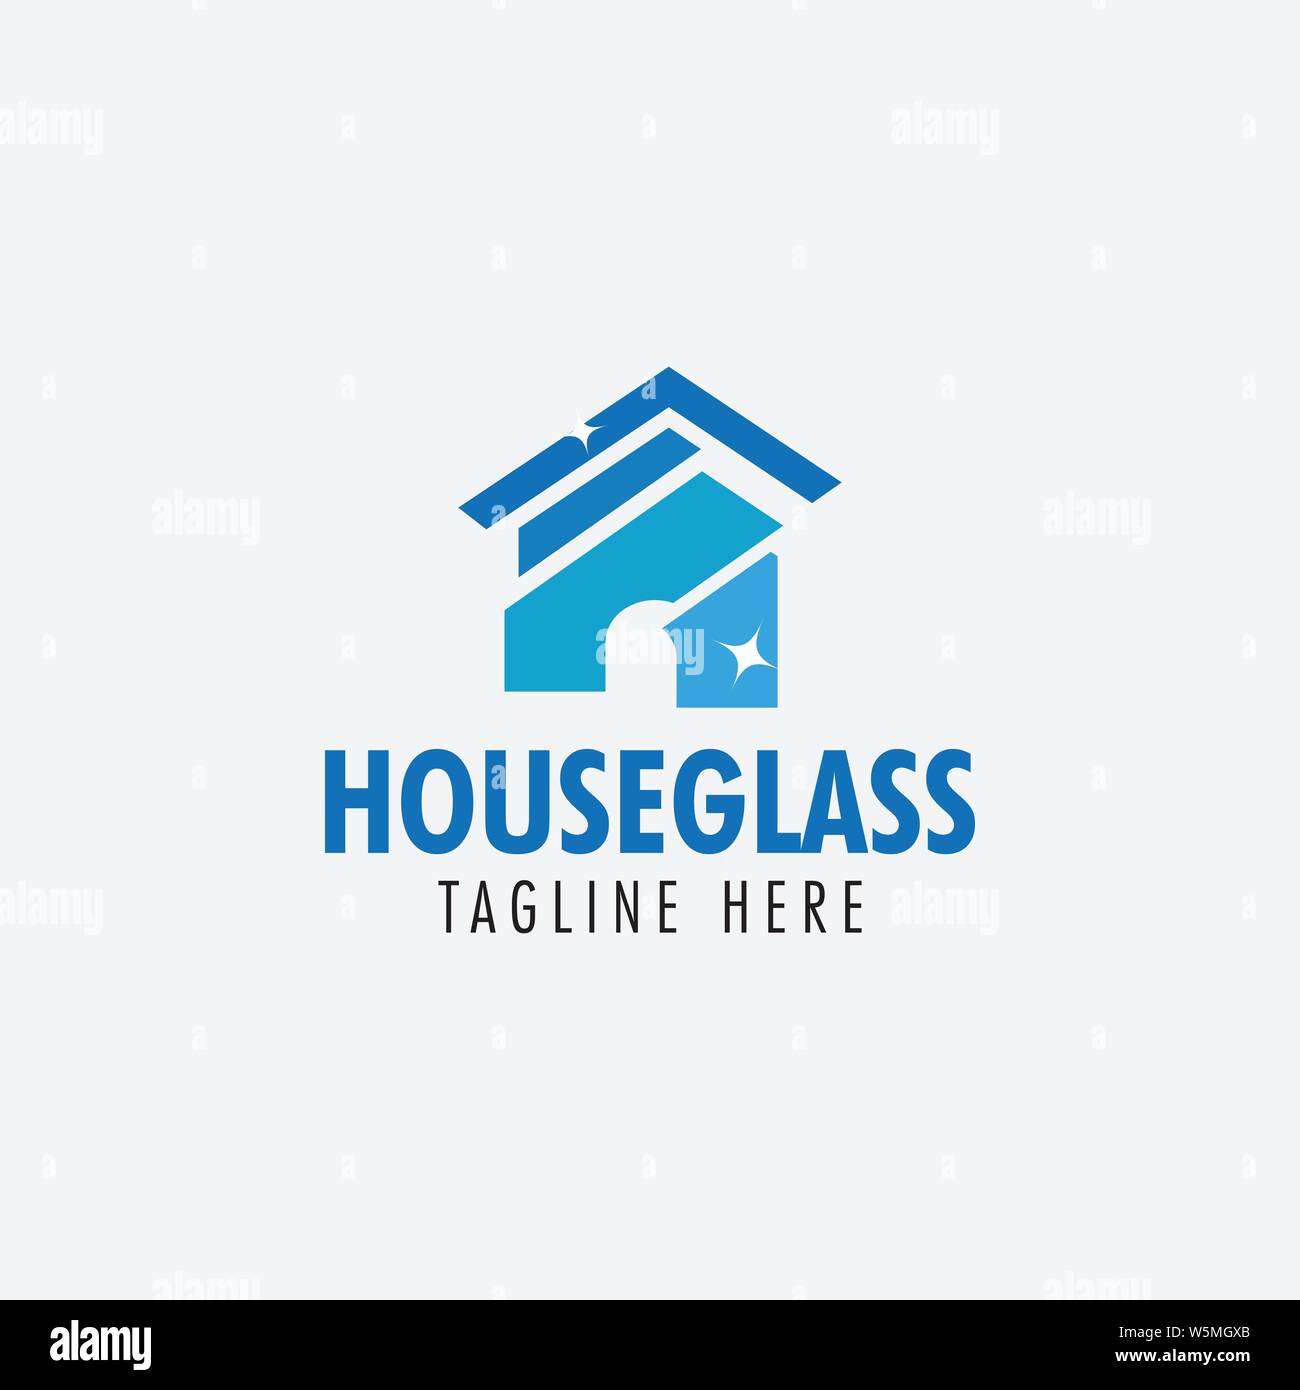 House glass logo design template vector isolated Stock Vector